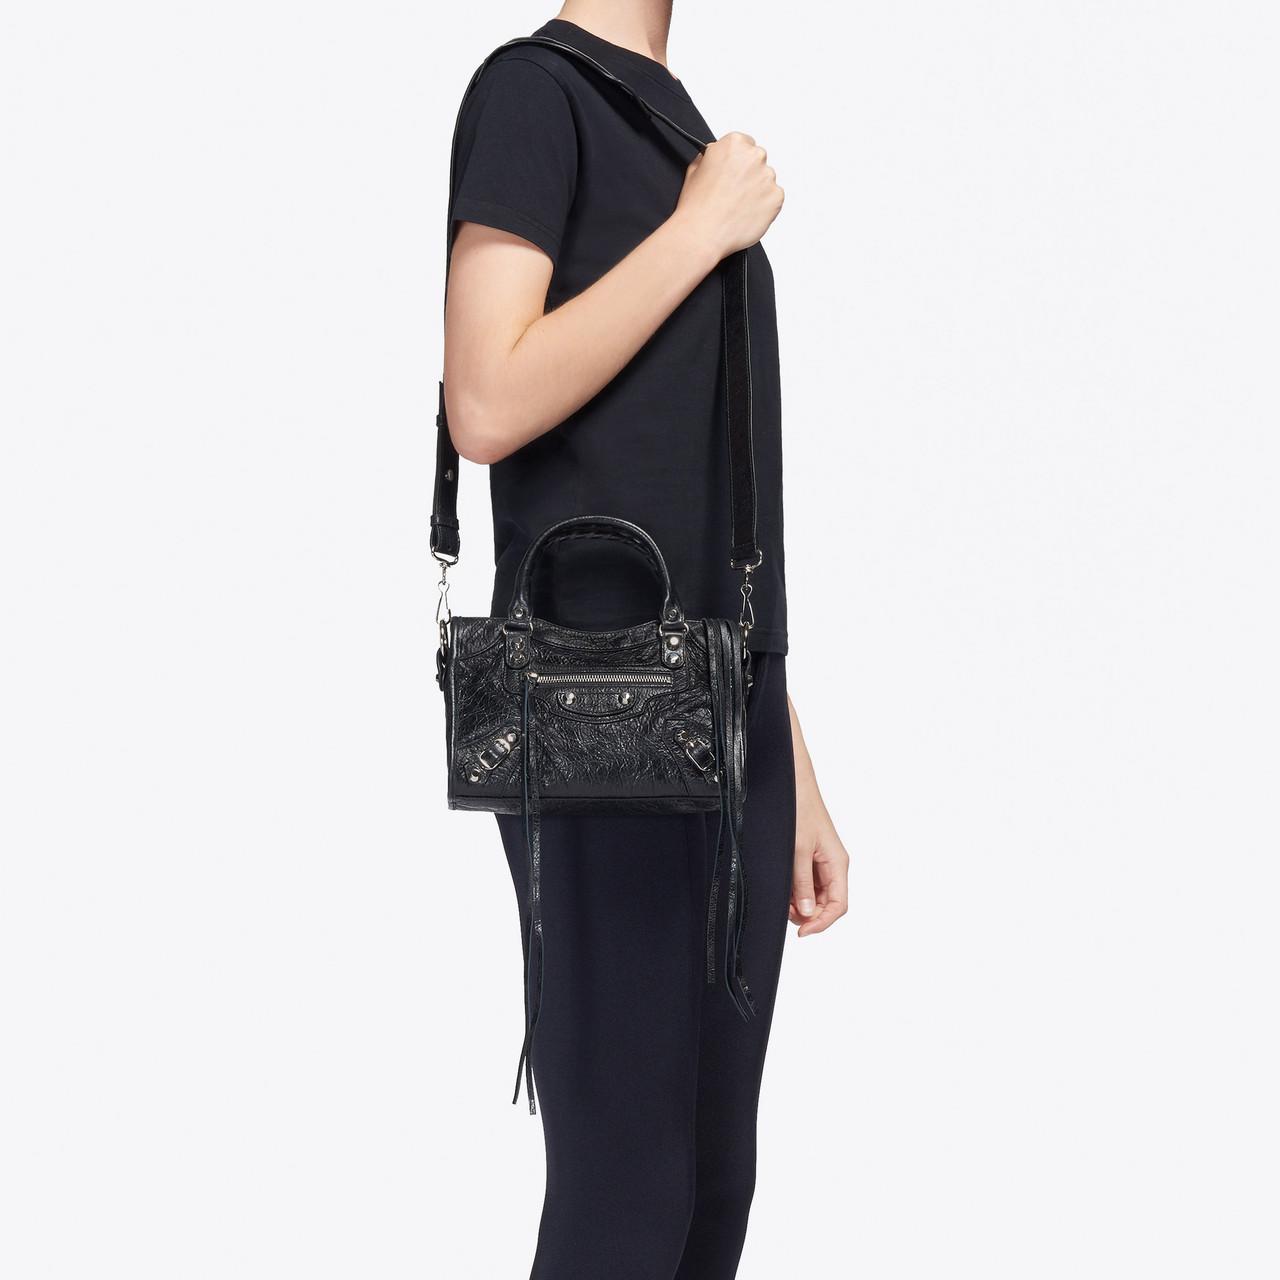 Balenciaga Leather Classic City Mini Shoulder Bag in Black - Lyst